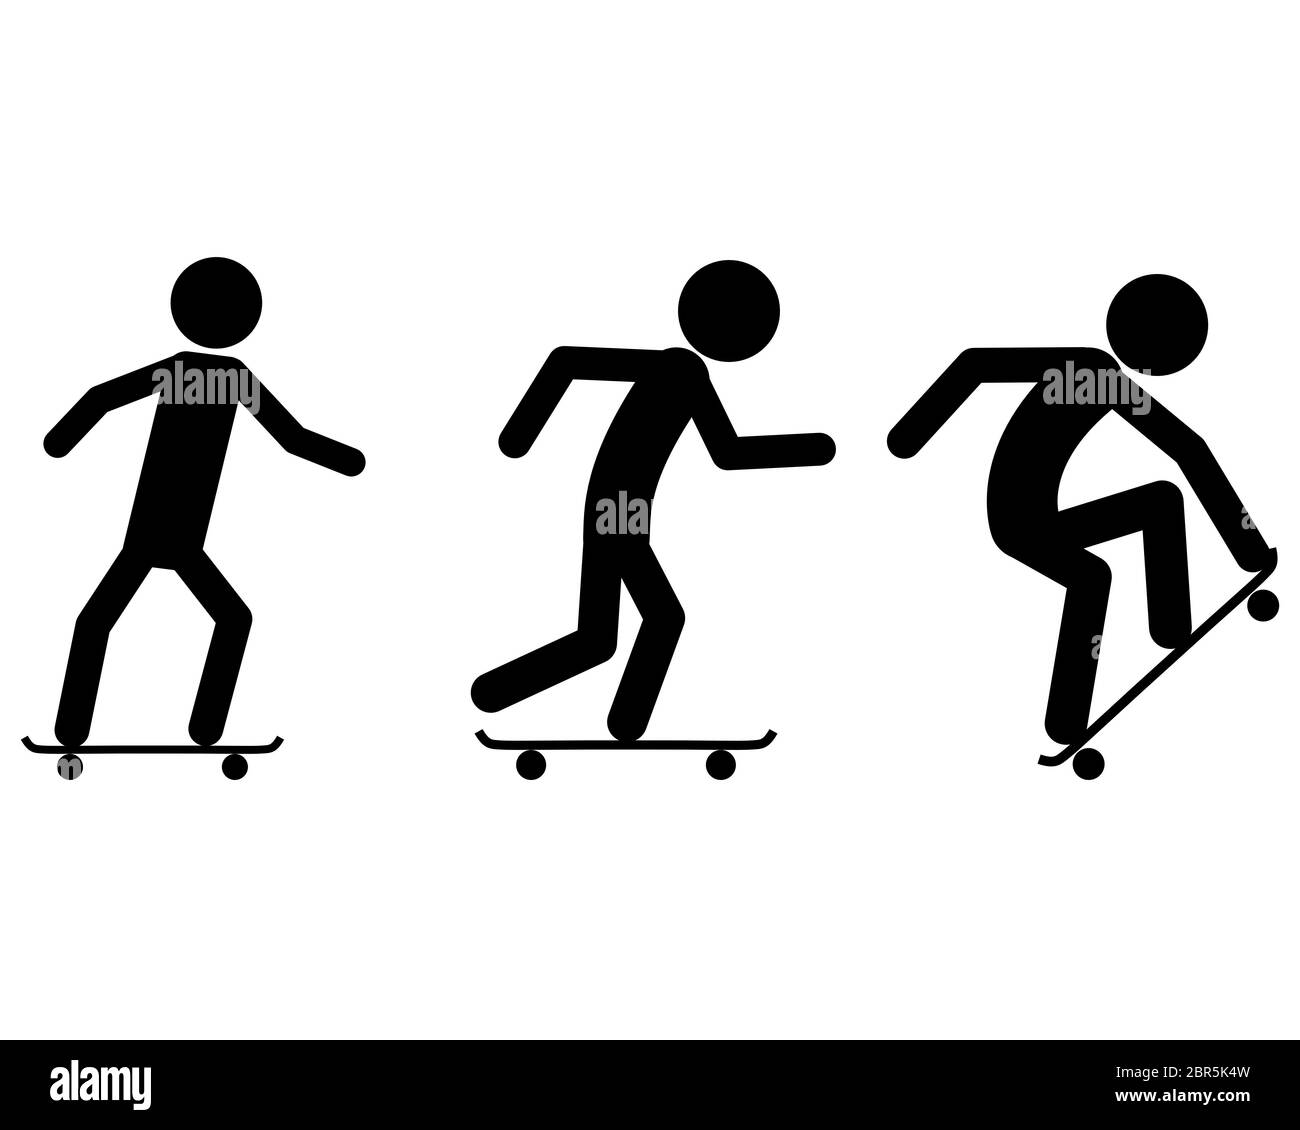 Piktogramm Skateboard fahren Stock Photo - Alamy